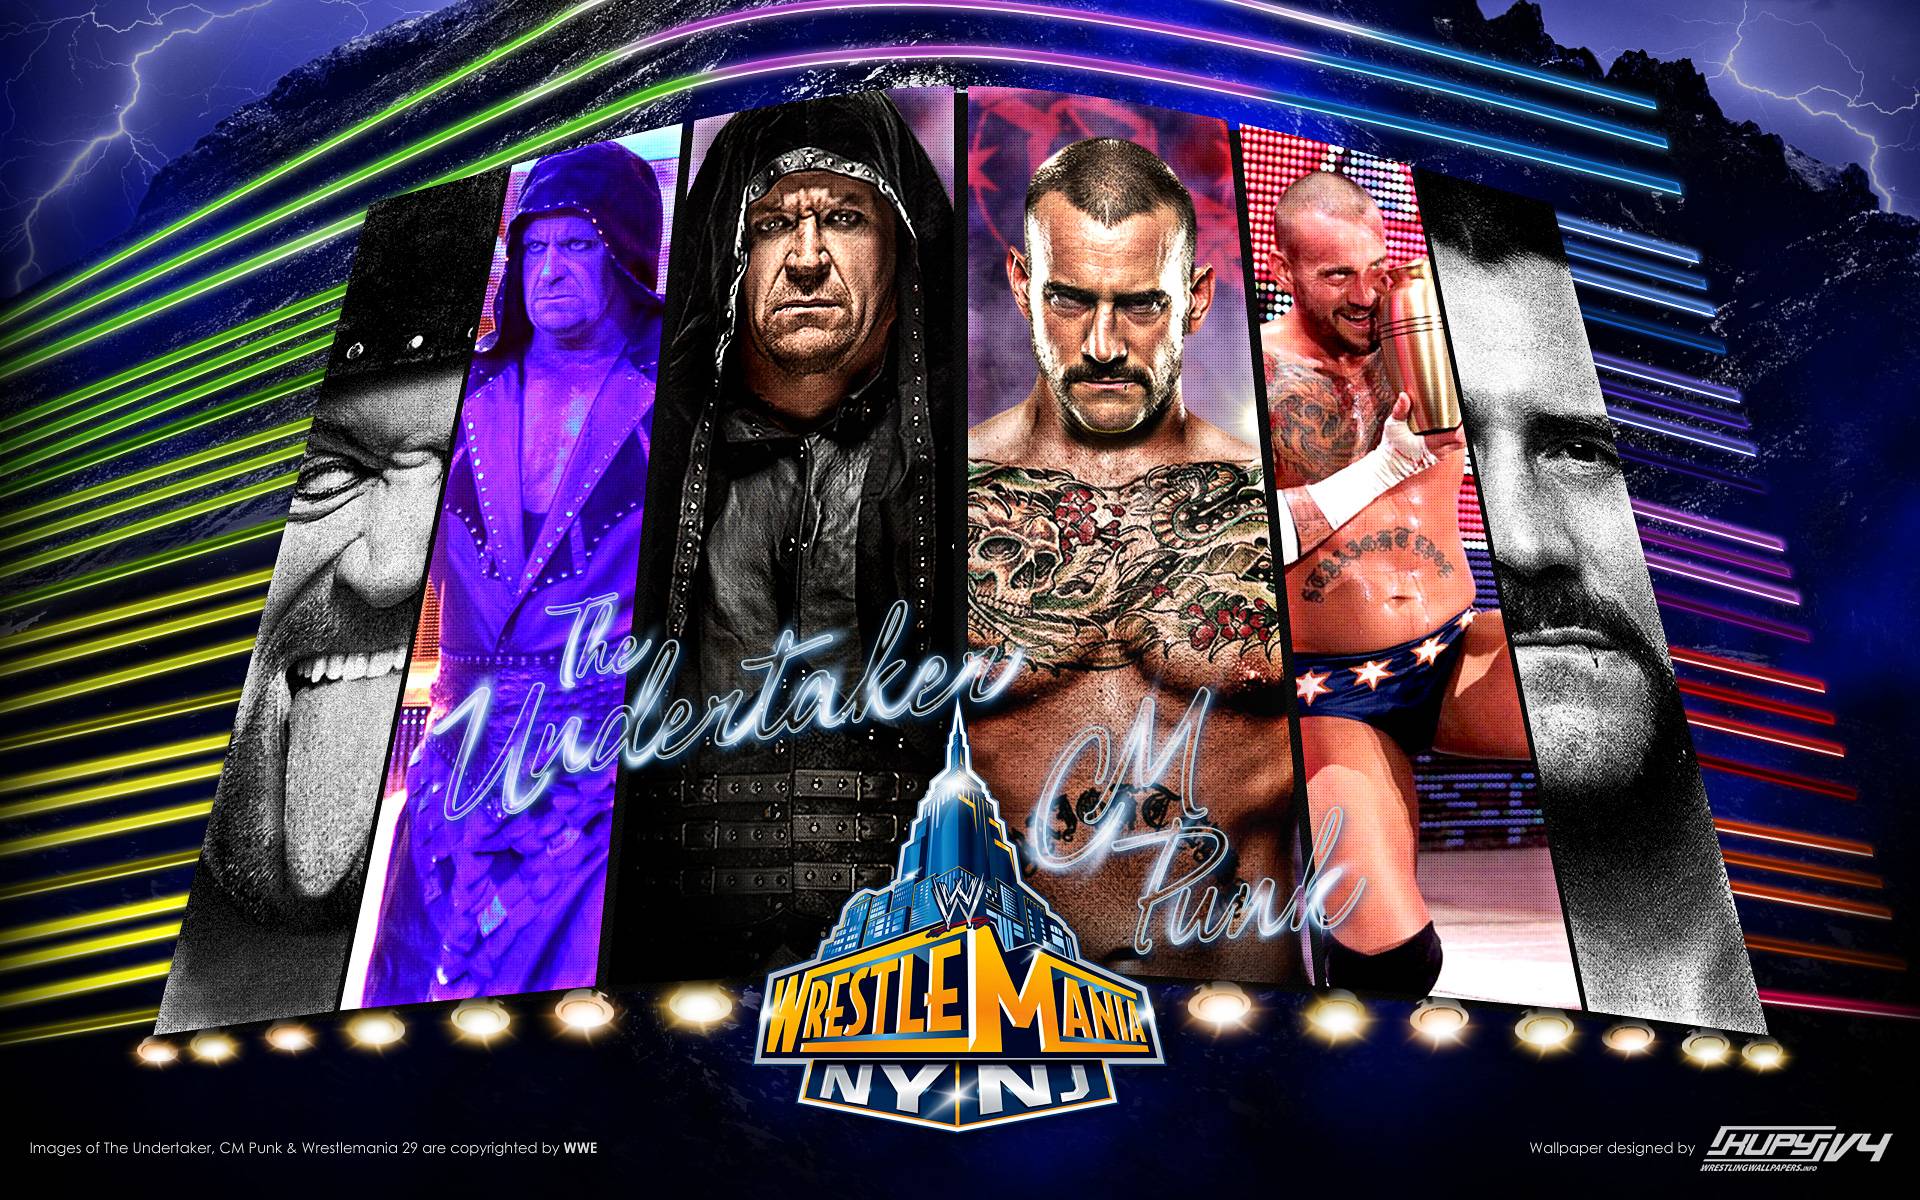 NEW WrestleMania 29 wallpaper: The Undertaker vs. CM Punk